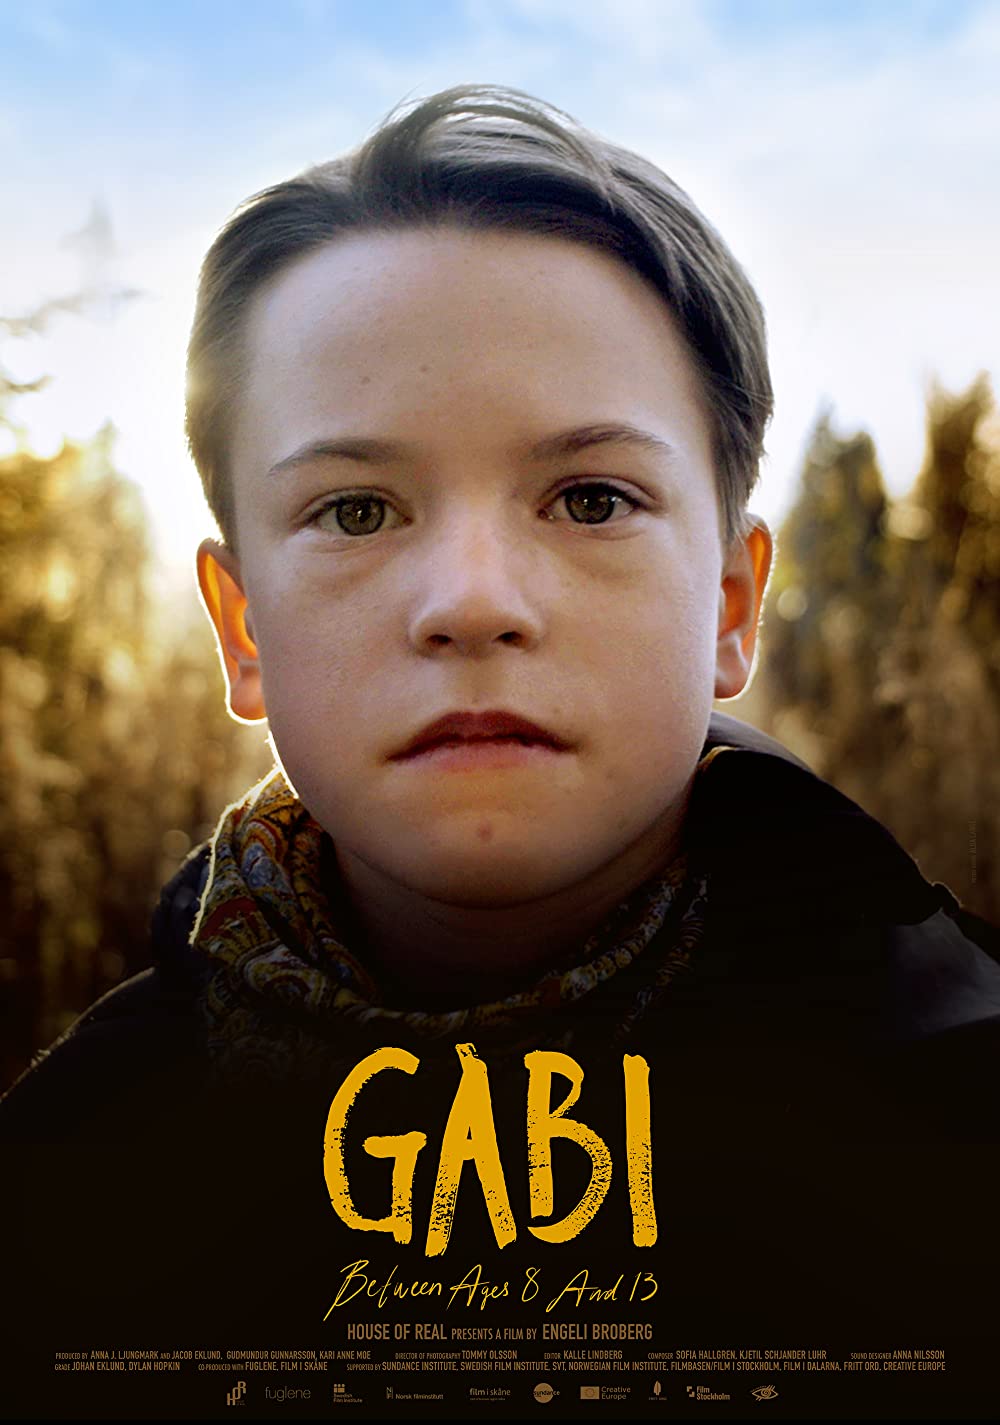 GIFF 2022: Gabi, mellan åren 8 och 13